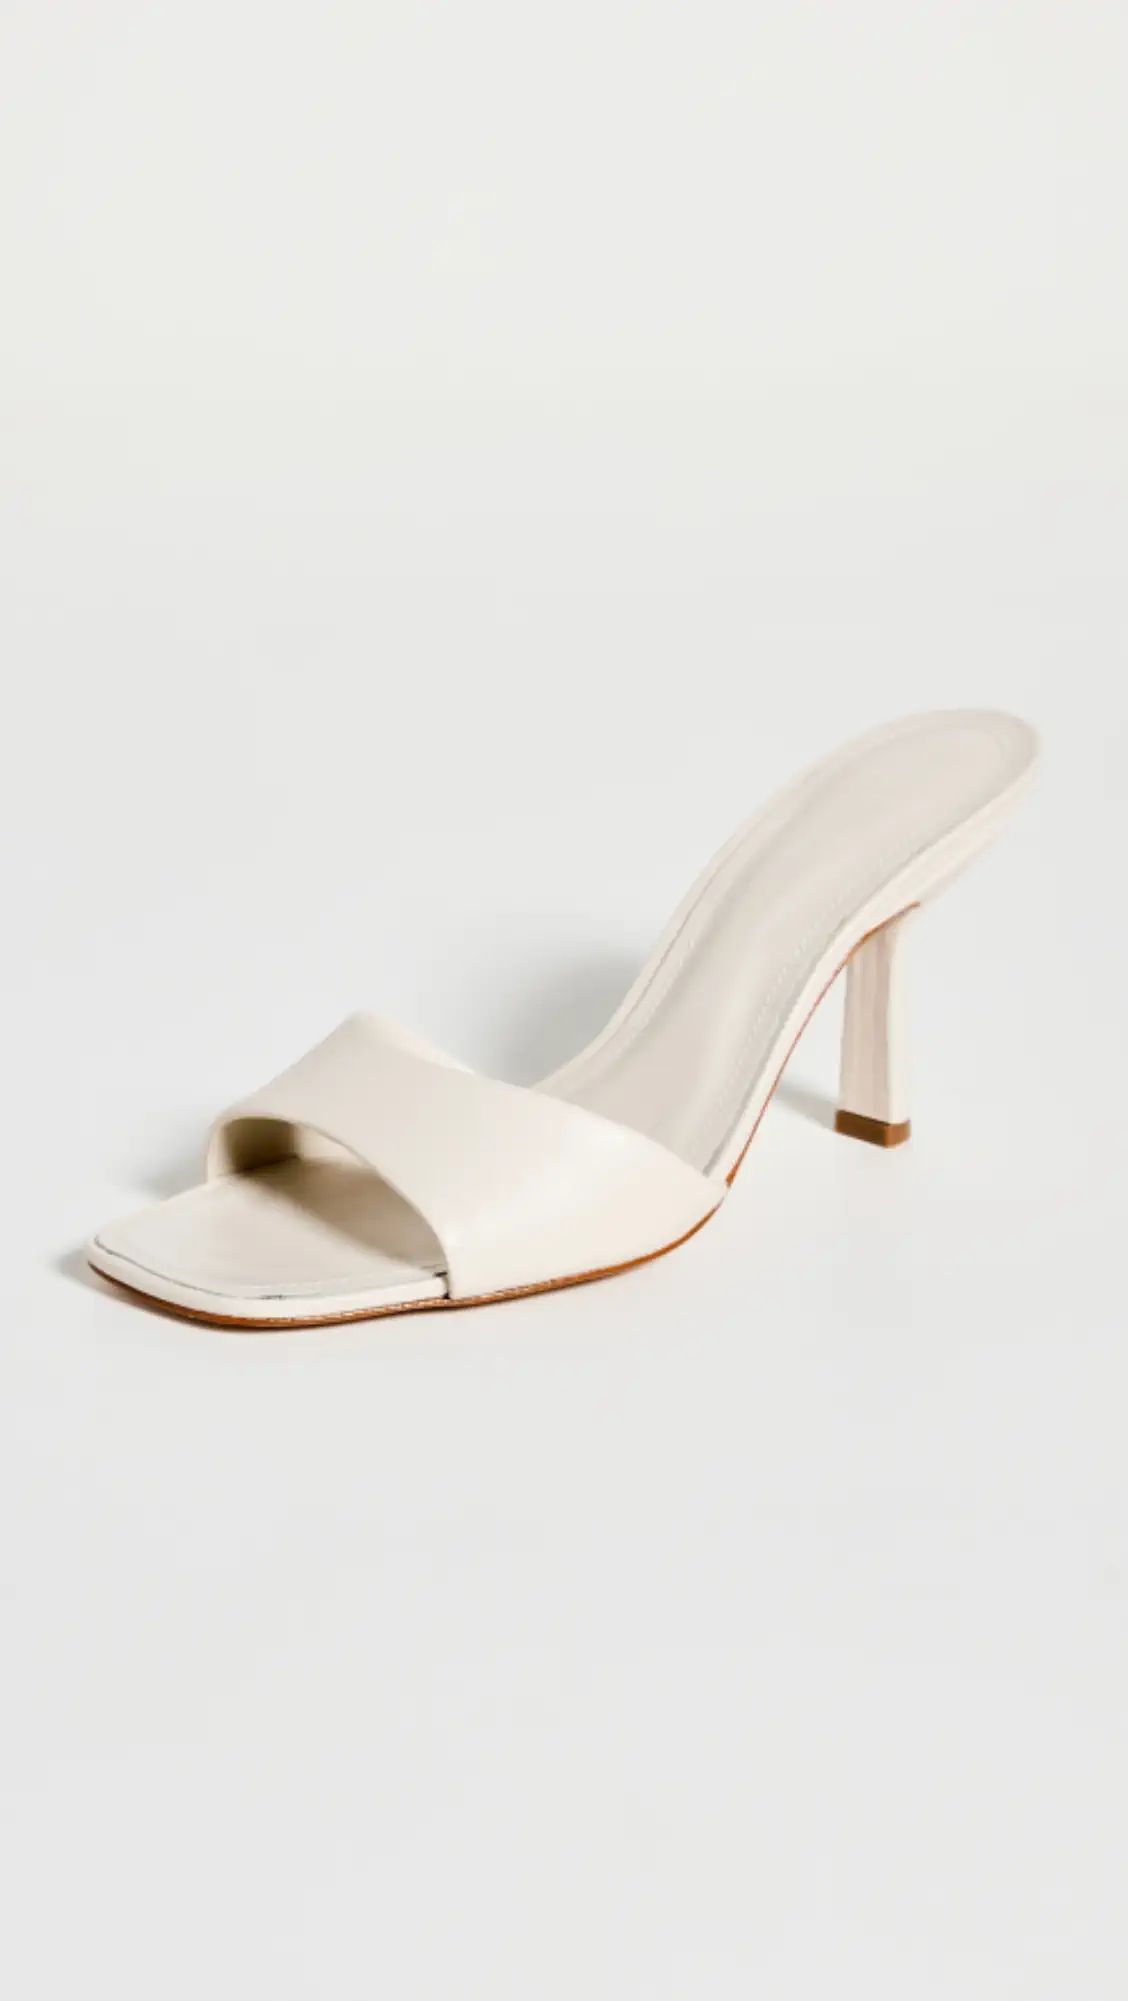 Posseni Sandals | Shopbop